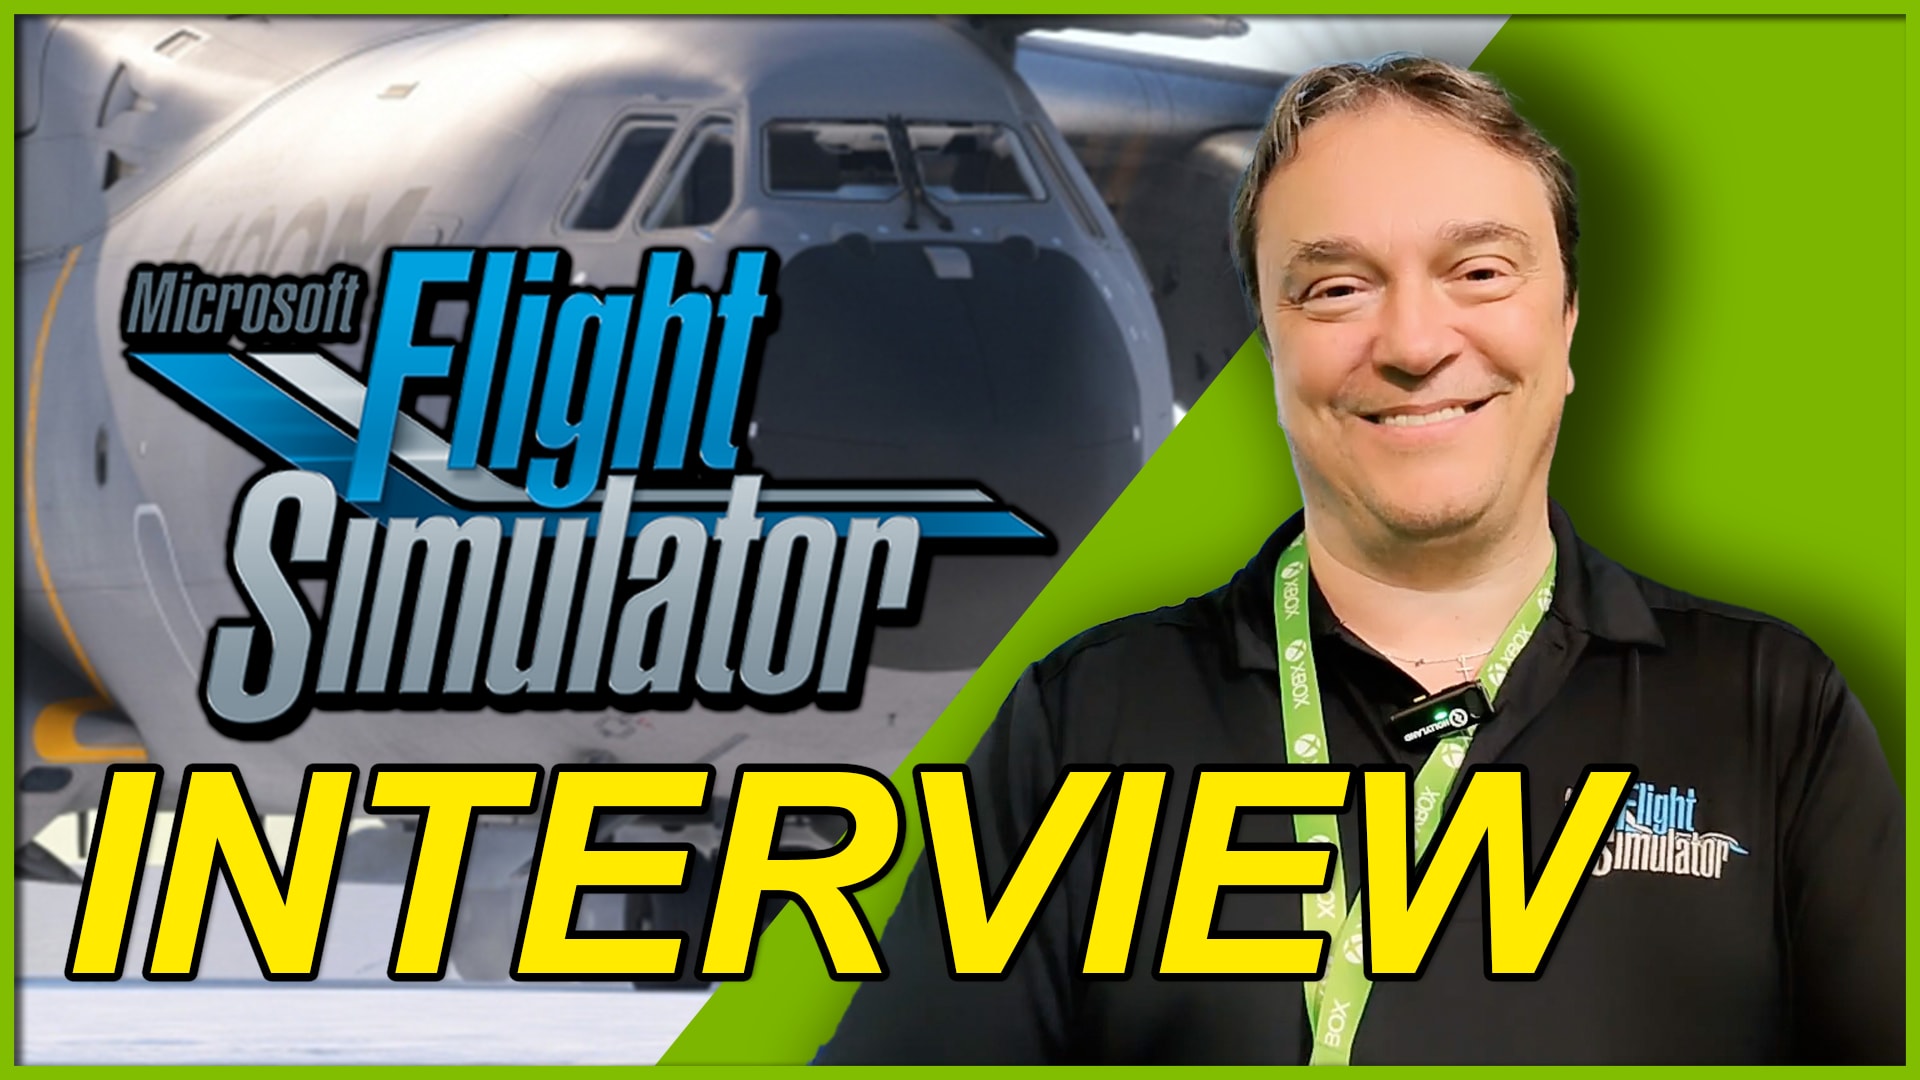 Microsoft Flight Simulator 2024: A New Experience